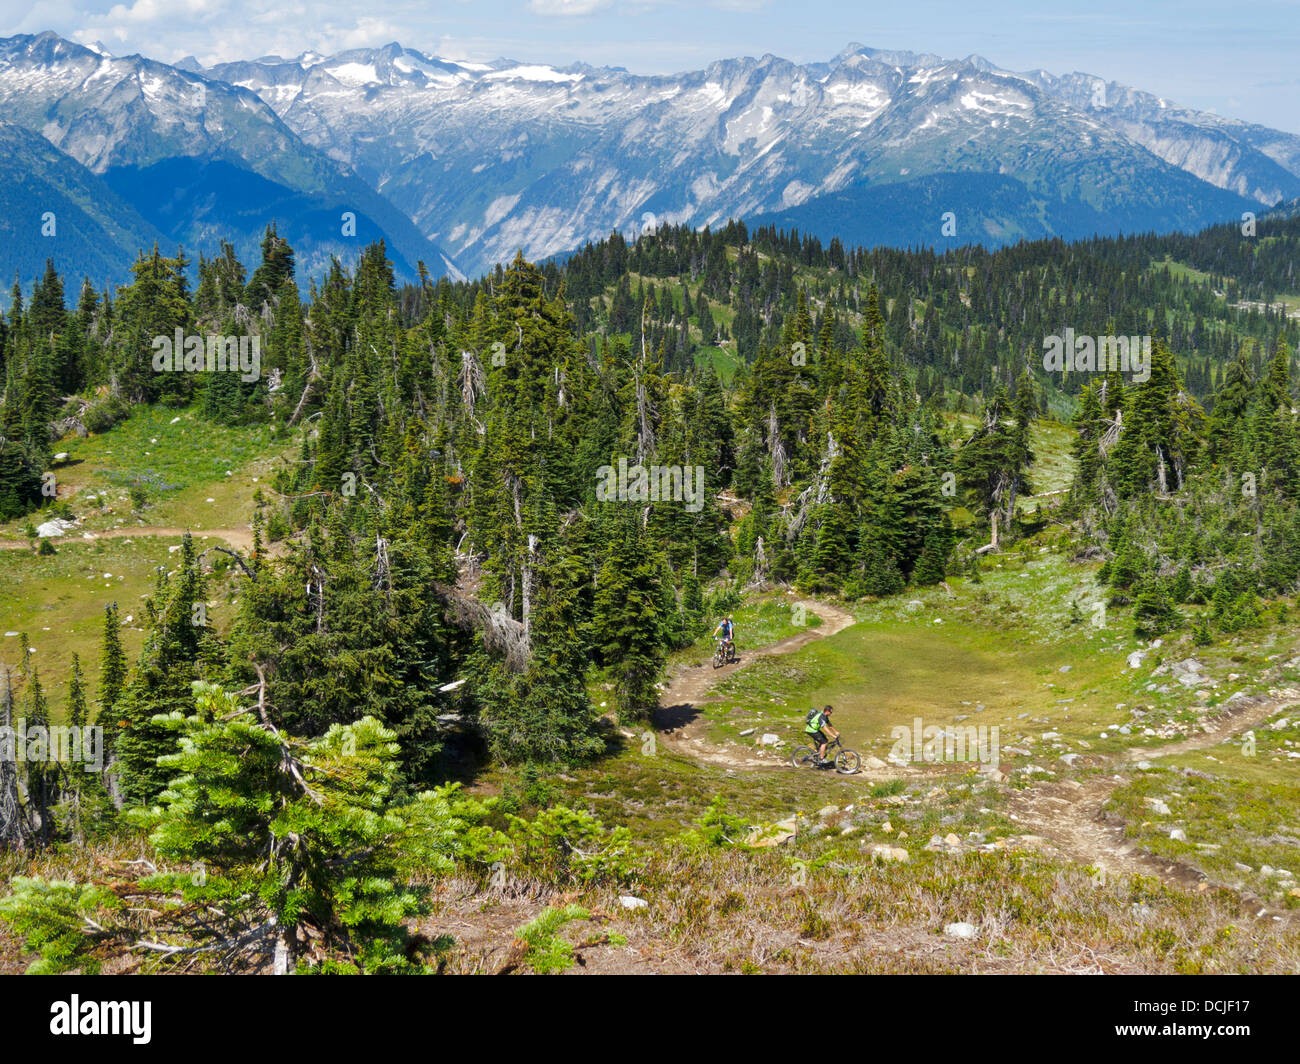 Two mountain bikers on Frisby Ridge, a high alpine mountain biking trail near Revelstoke, British Columbia, Canada. Stock Photo